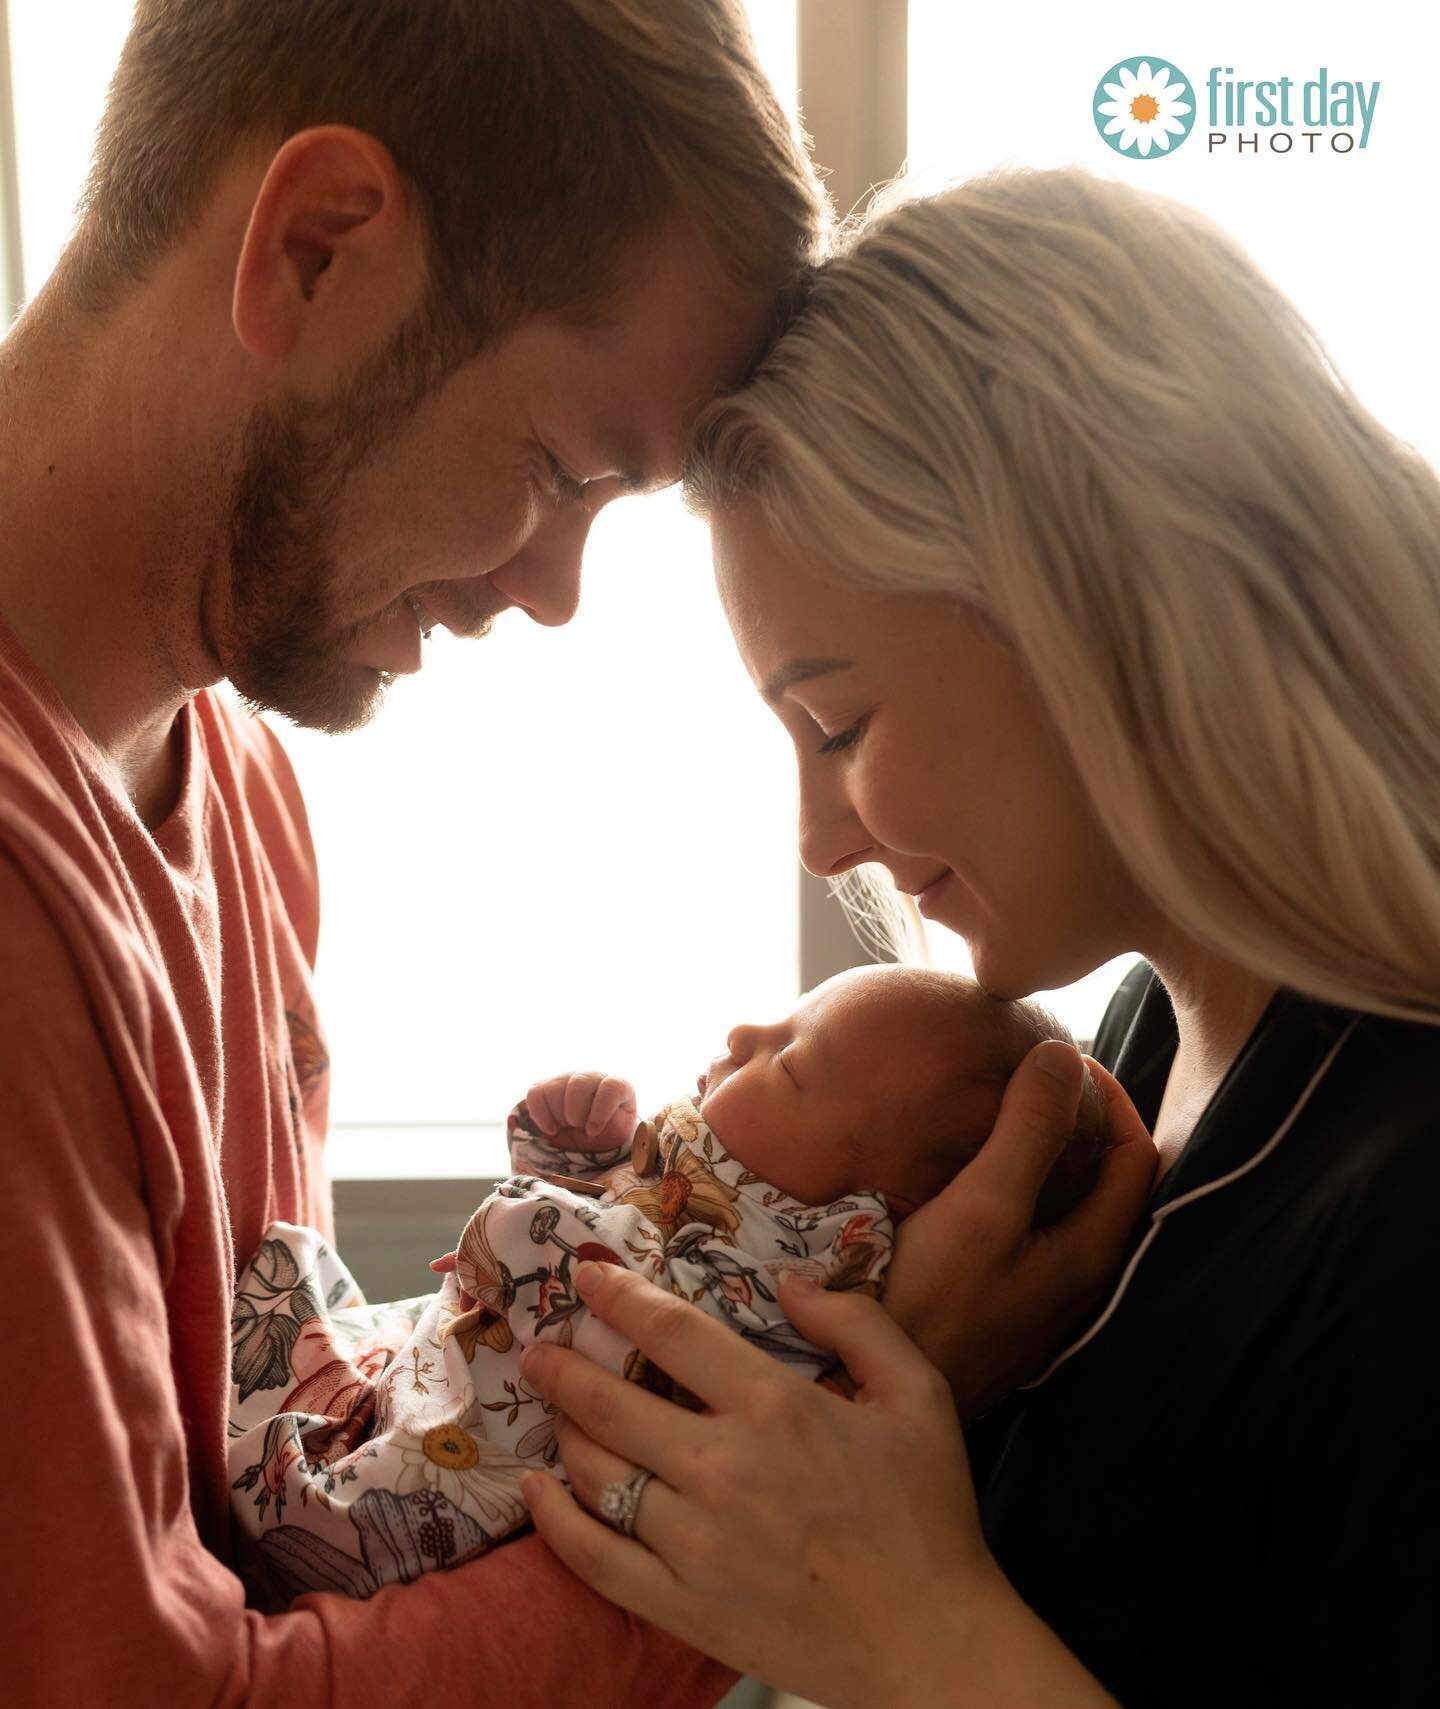 Love at first sight. ❤️❤️❤️
#firstdayphoto
www.firstdayphoto.com
.
.
.
.
.
#fresh48 #first48 #firstdayphotonewborns #newbornphotography #newbornphotographer #babyphoto #babyphotos #babyphotography #babies #cutebaby #babiesofinstagram #bundleofjoy #be